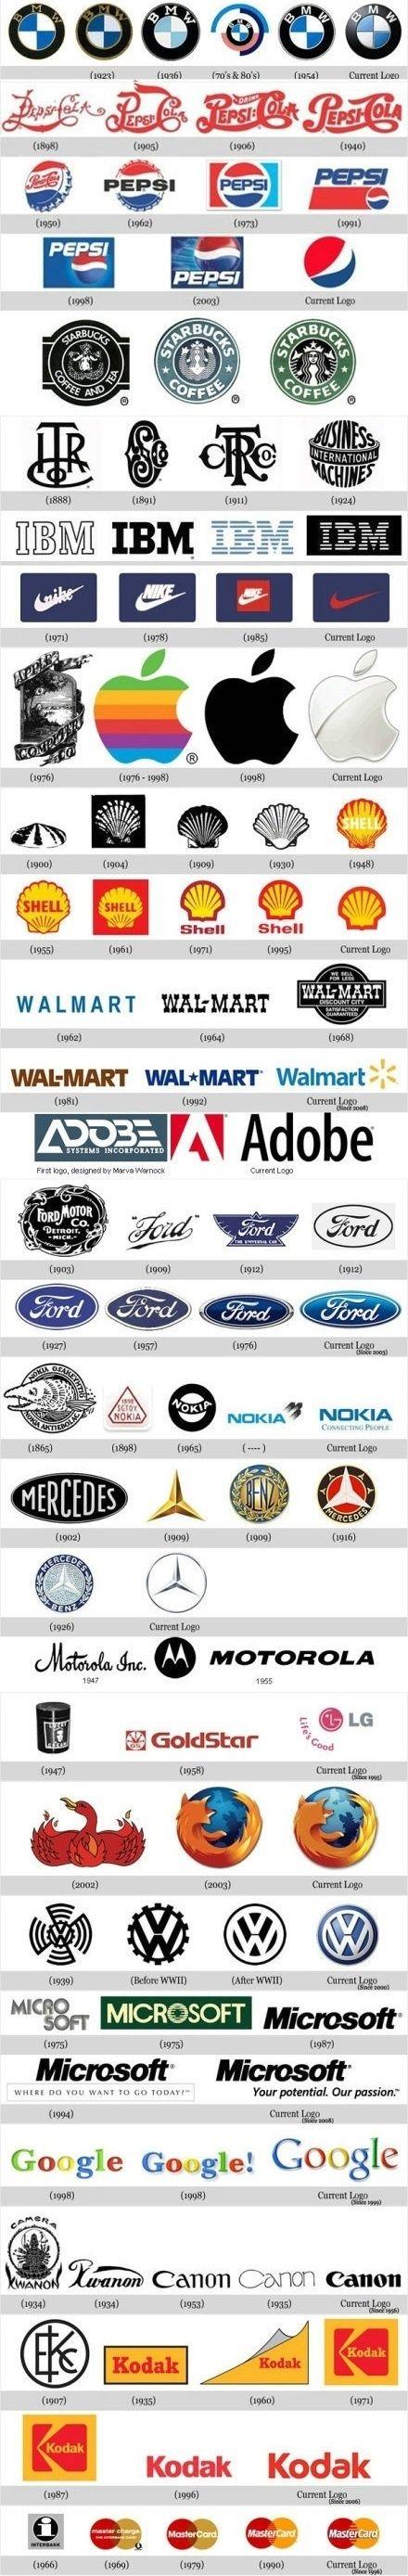 Cool Old Company Logo - Brand logos evolution. Pretty cool evolution. | HooftZakelijk ...